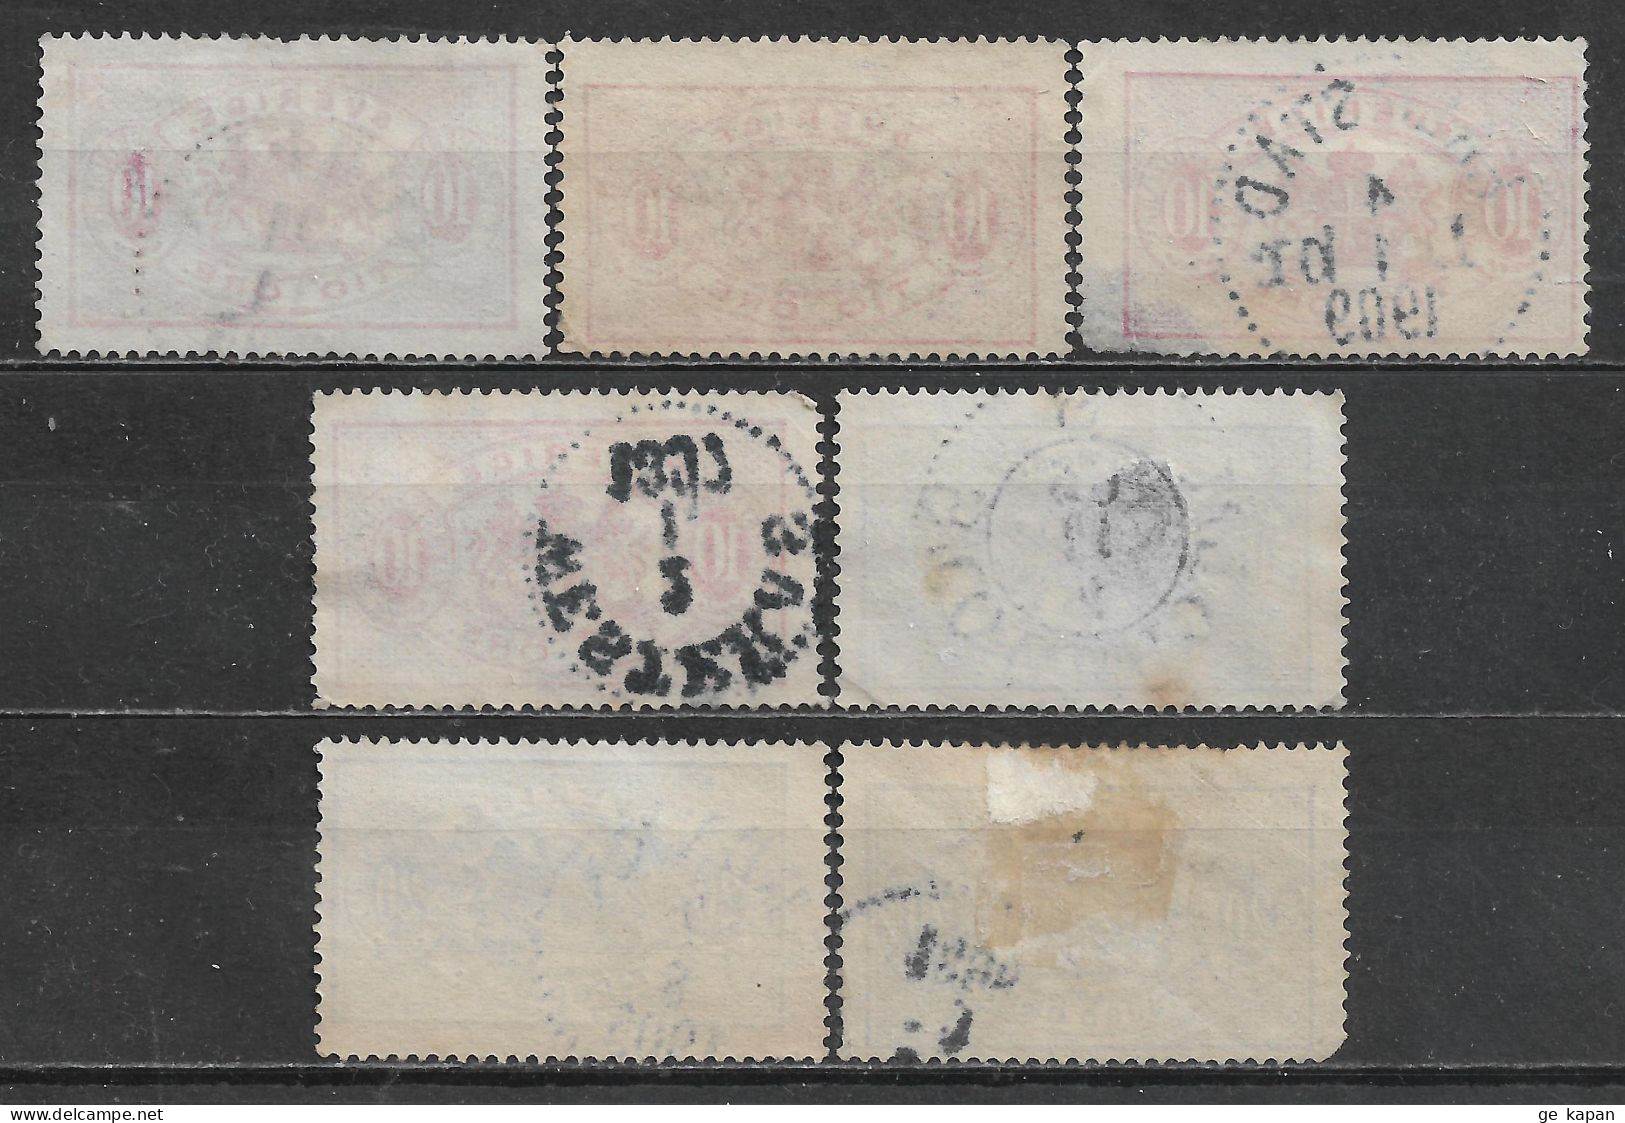 1891,1895 SWEDEN Official Set Of 7 Used Stamps Perf.13 (Scott # O17,O20) CV $2.40 - Service